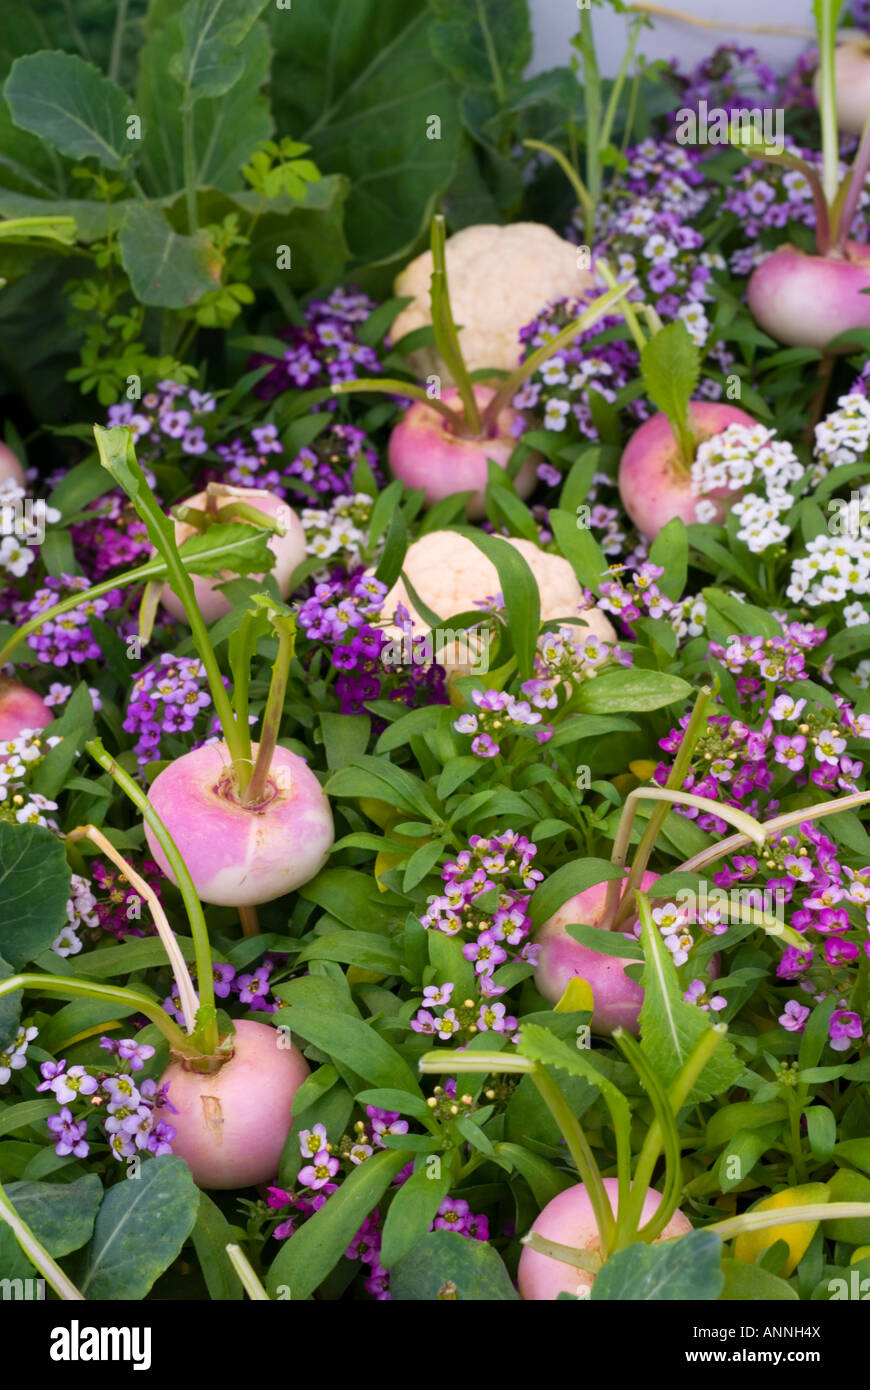 Turnips growing with flowers in garden; vegetables grows with flowering plants (Sweet Alyssum / Lobularia) Stock Photo